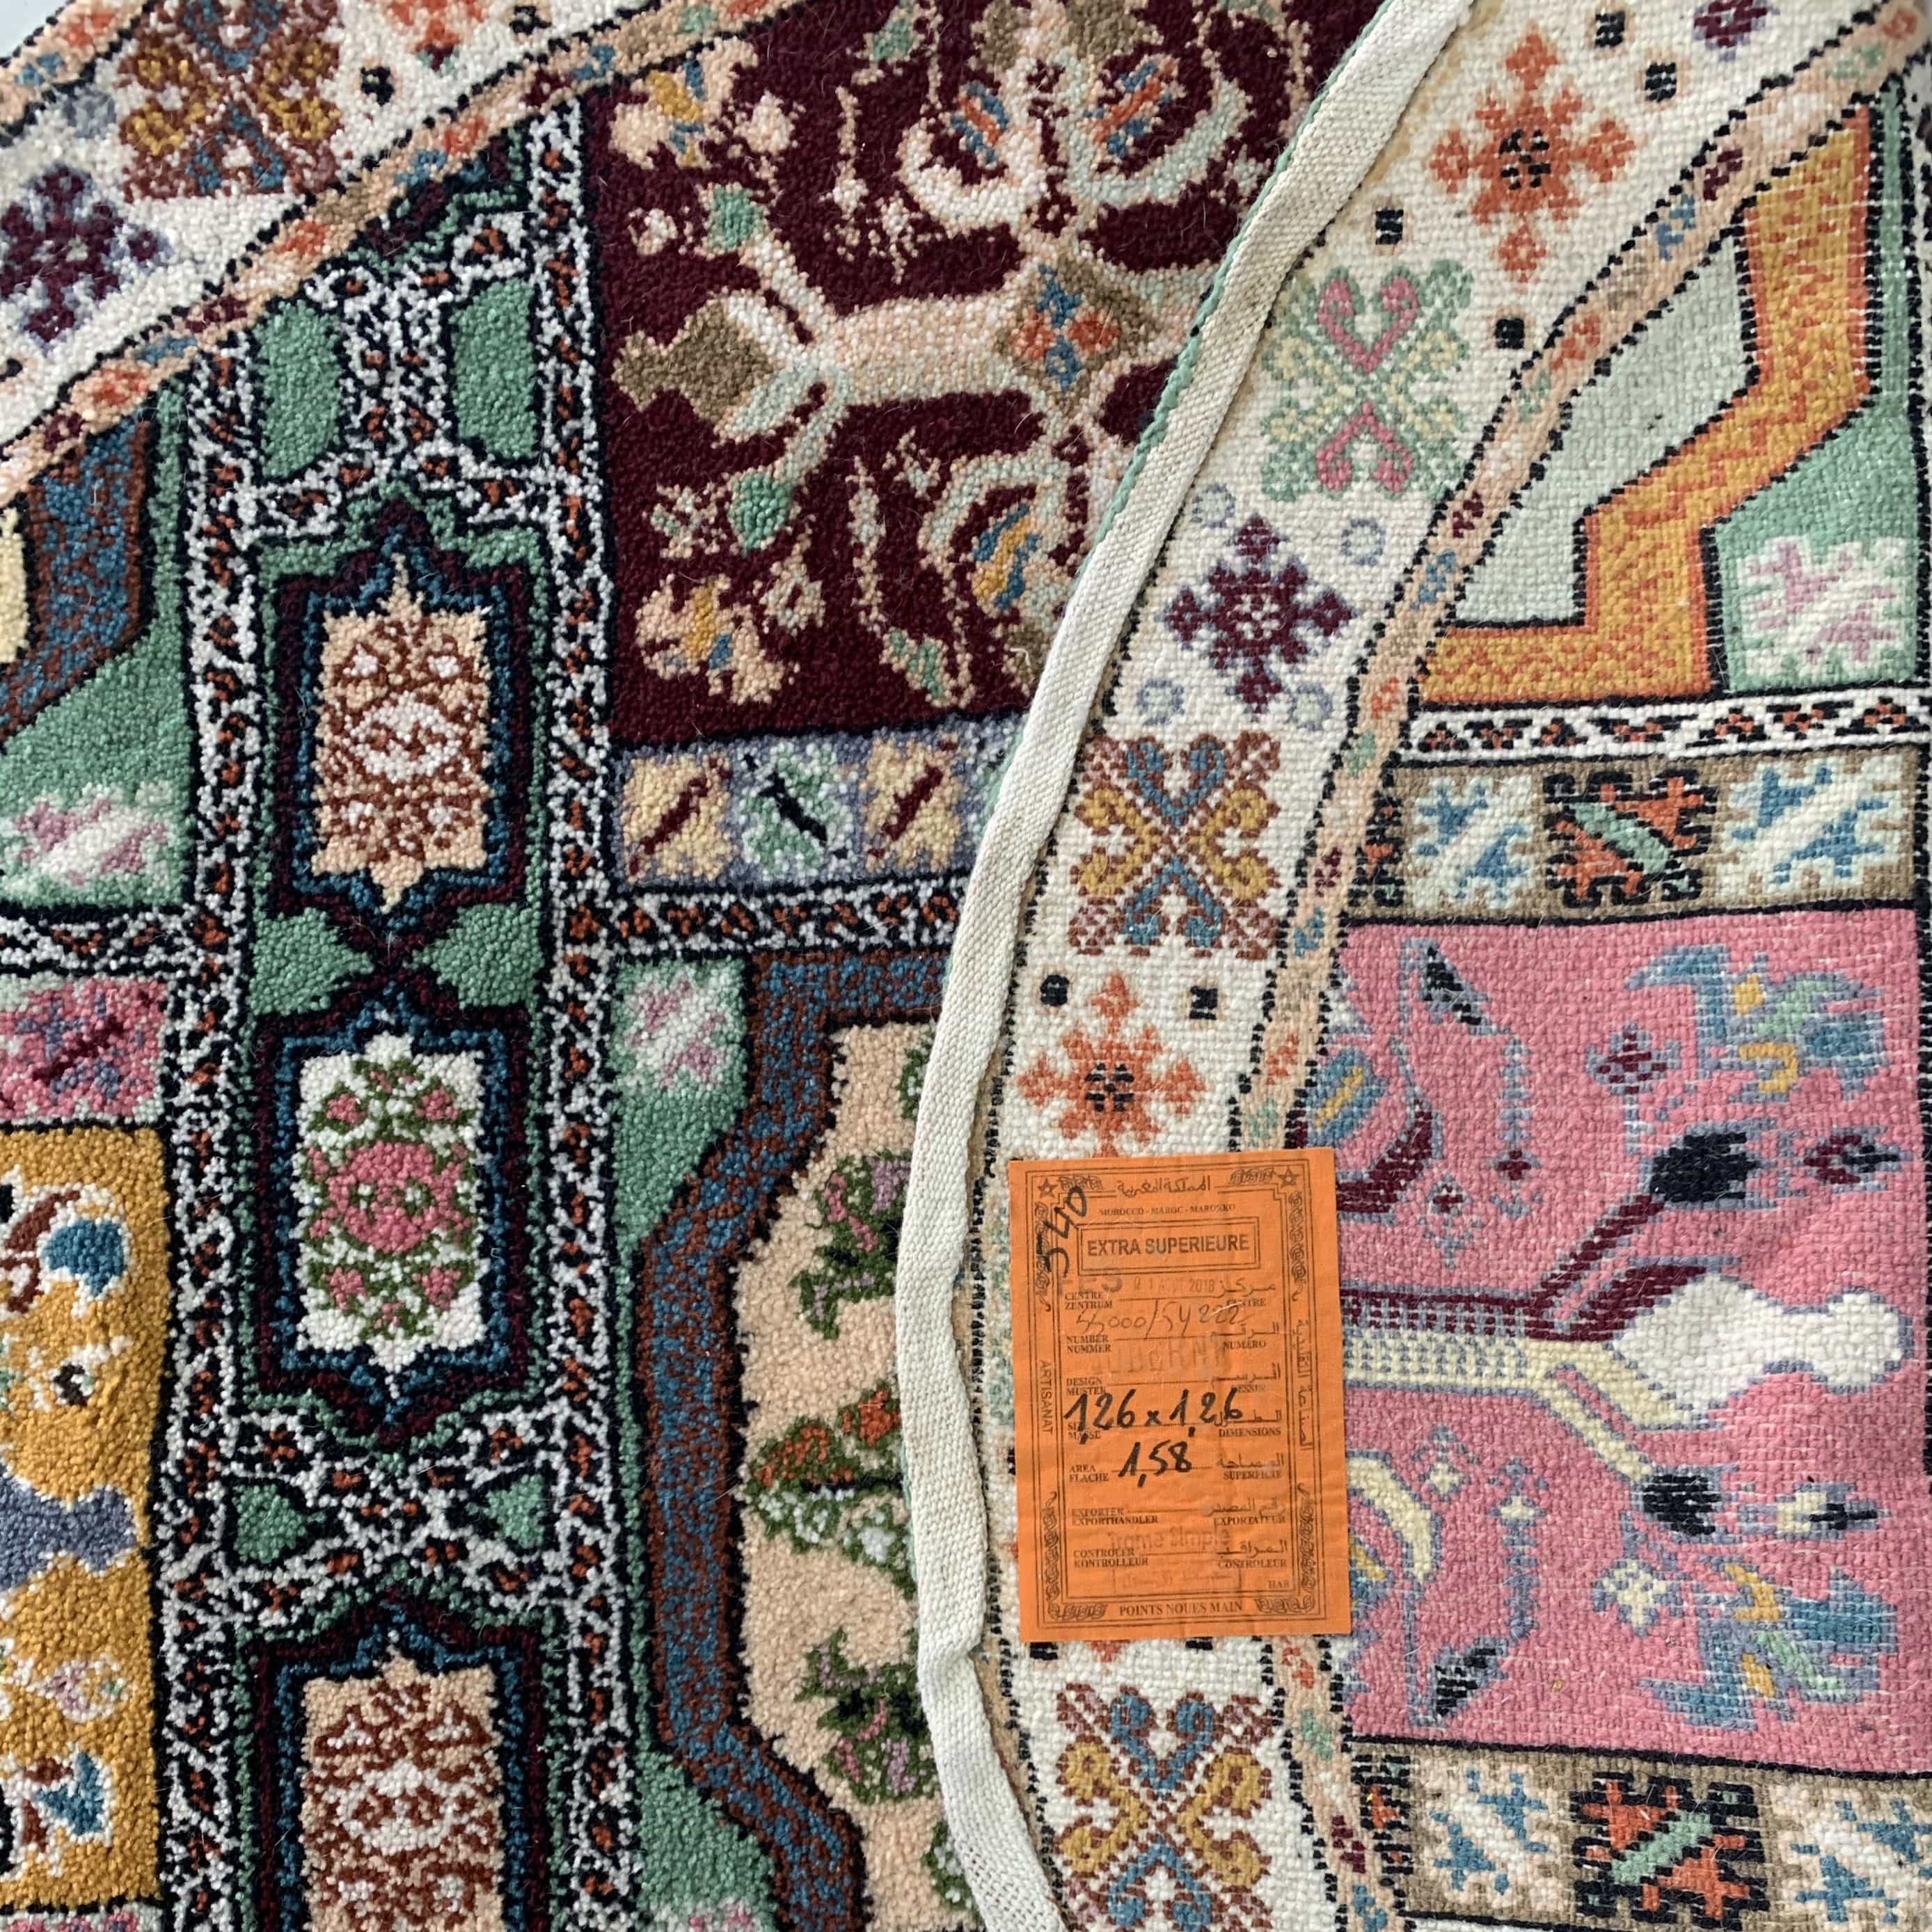 Fez Round Carpet - Mediouna Medallions - Fez Carpet